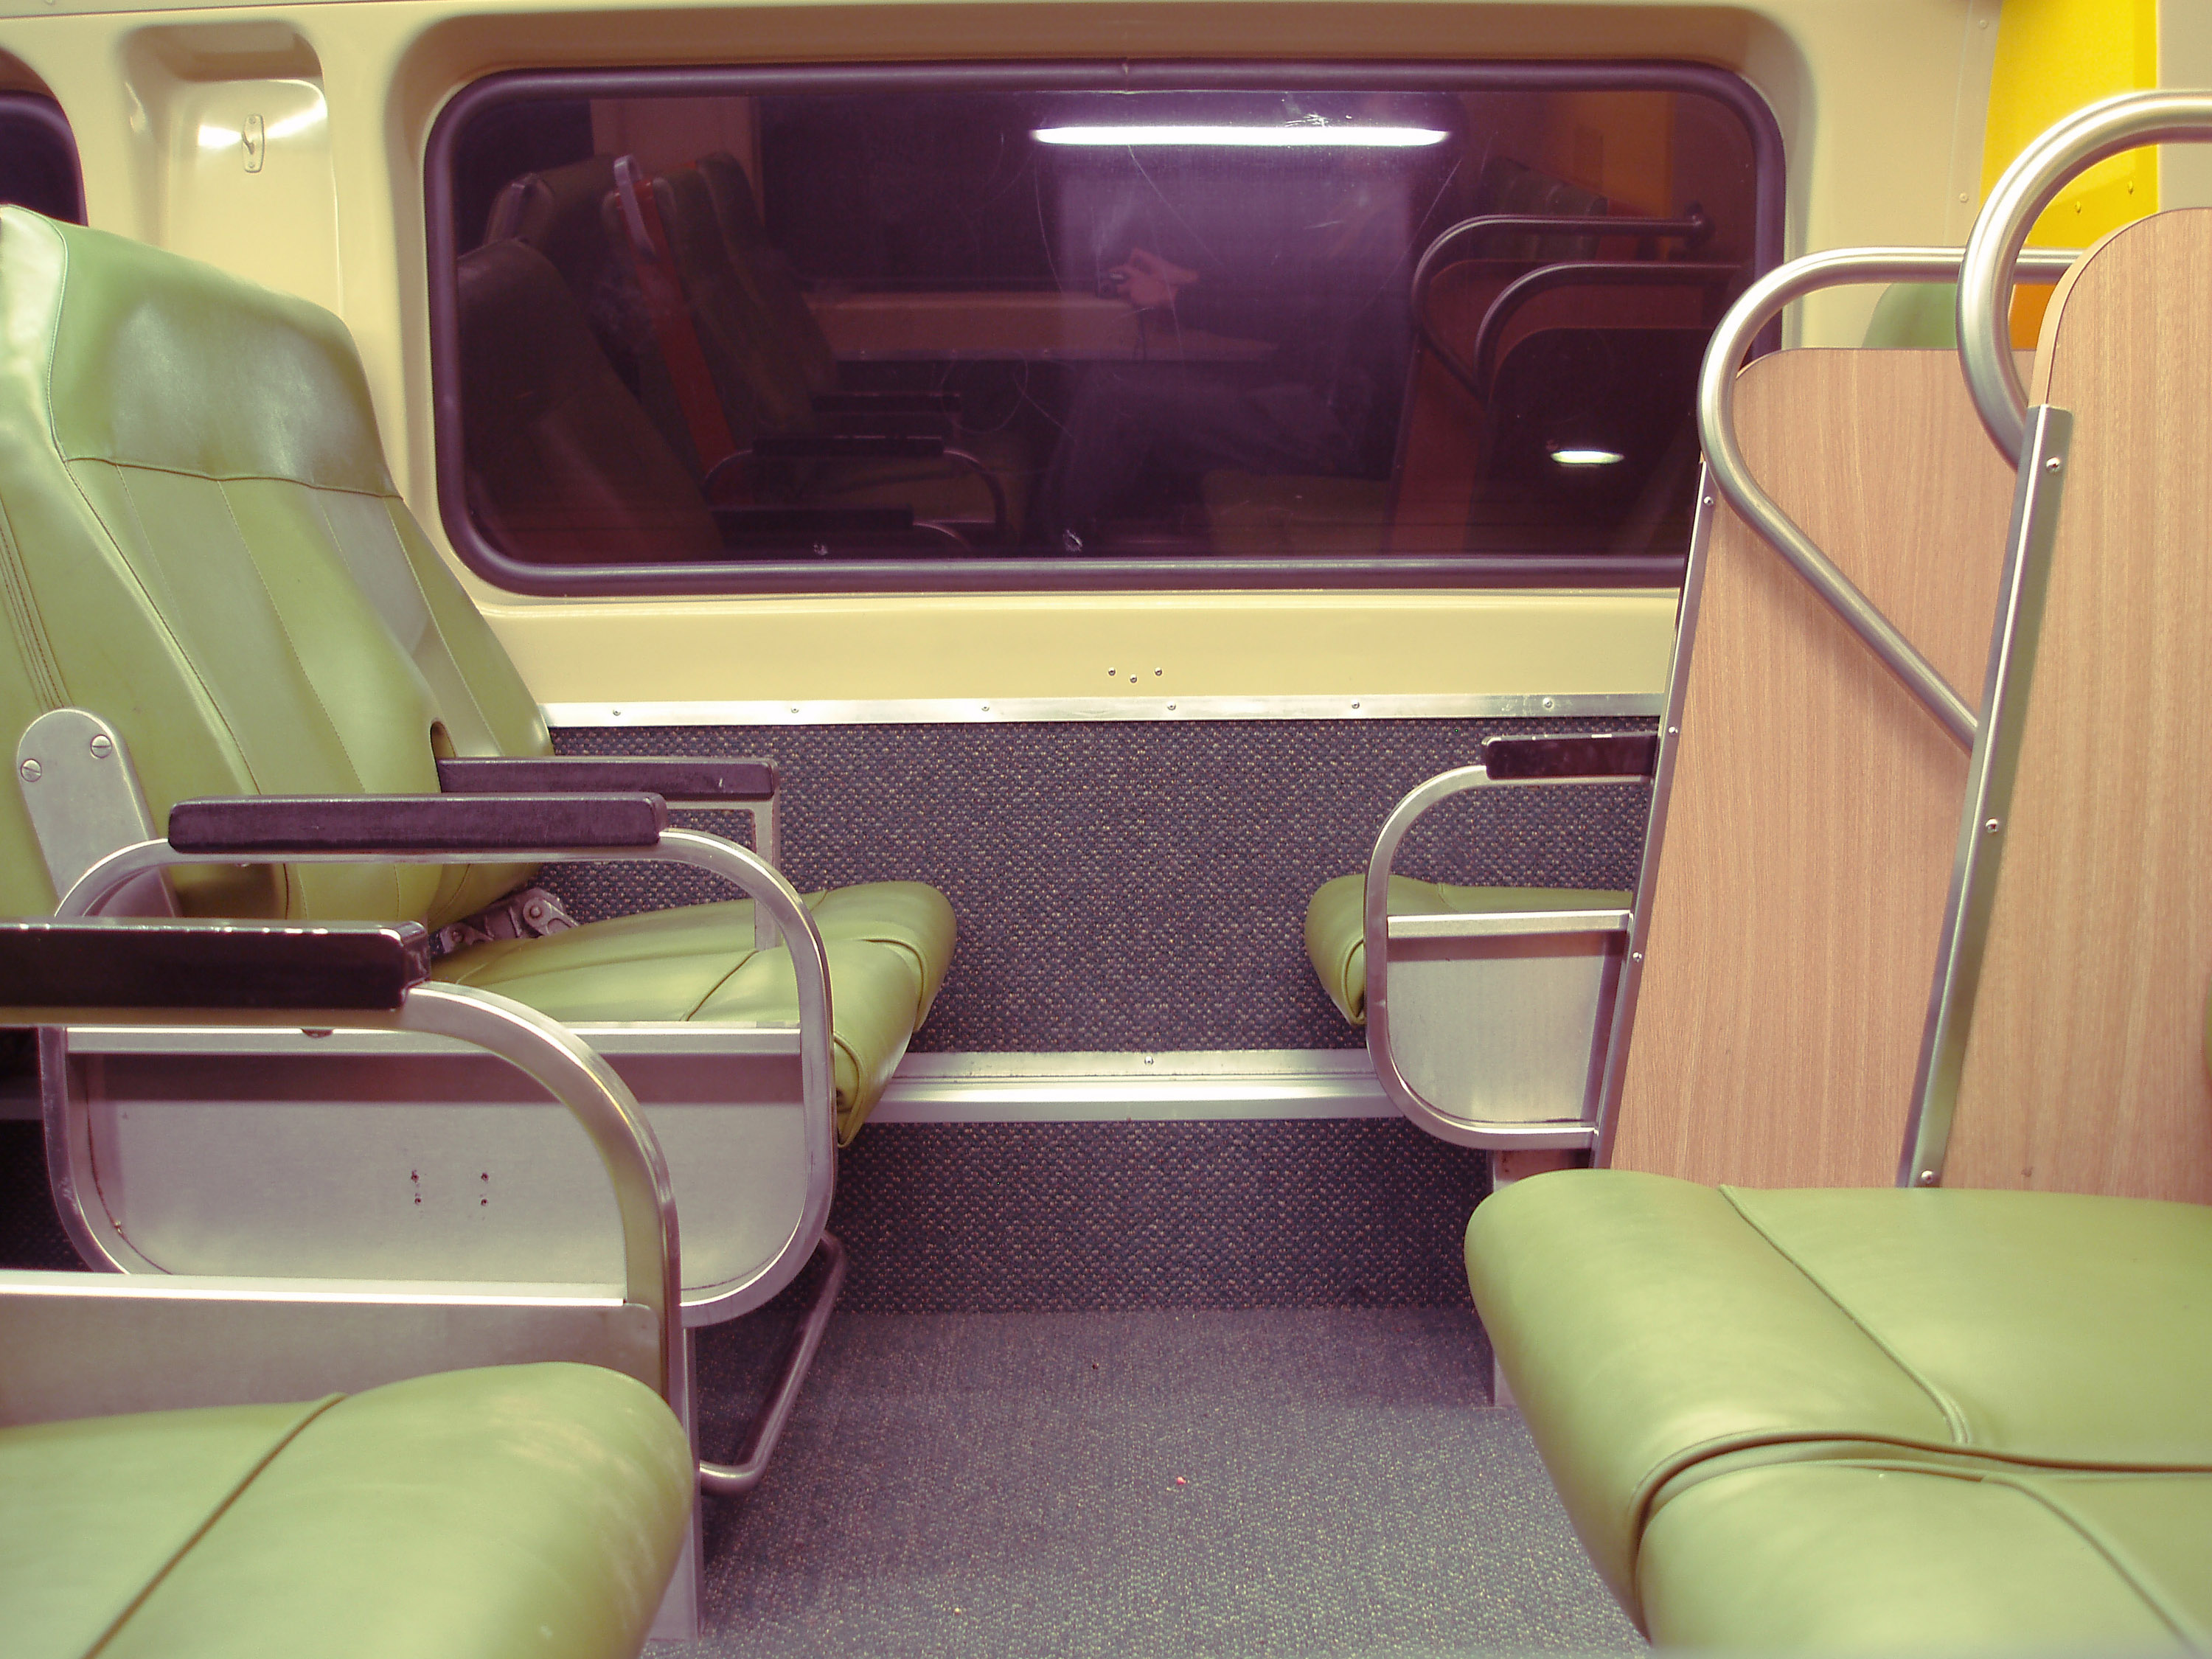 train seating-3250 | Stockarch Free Stock Photos